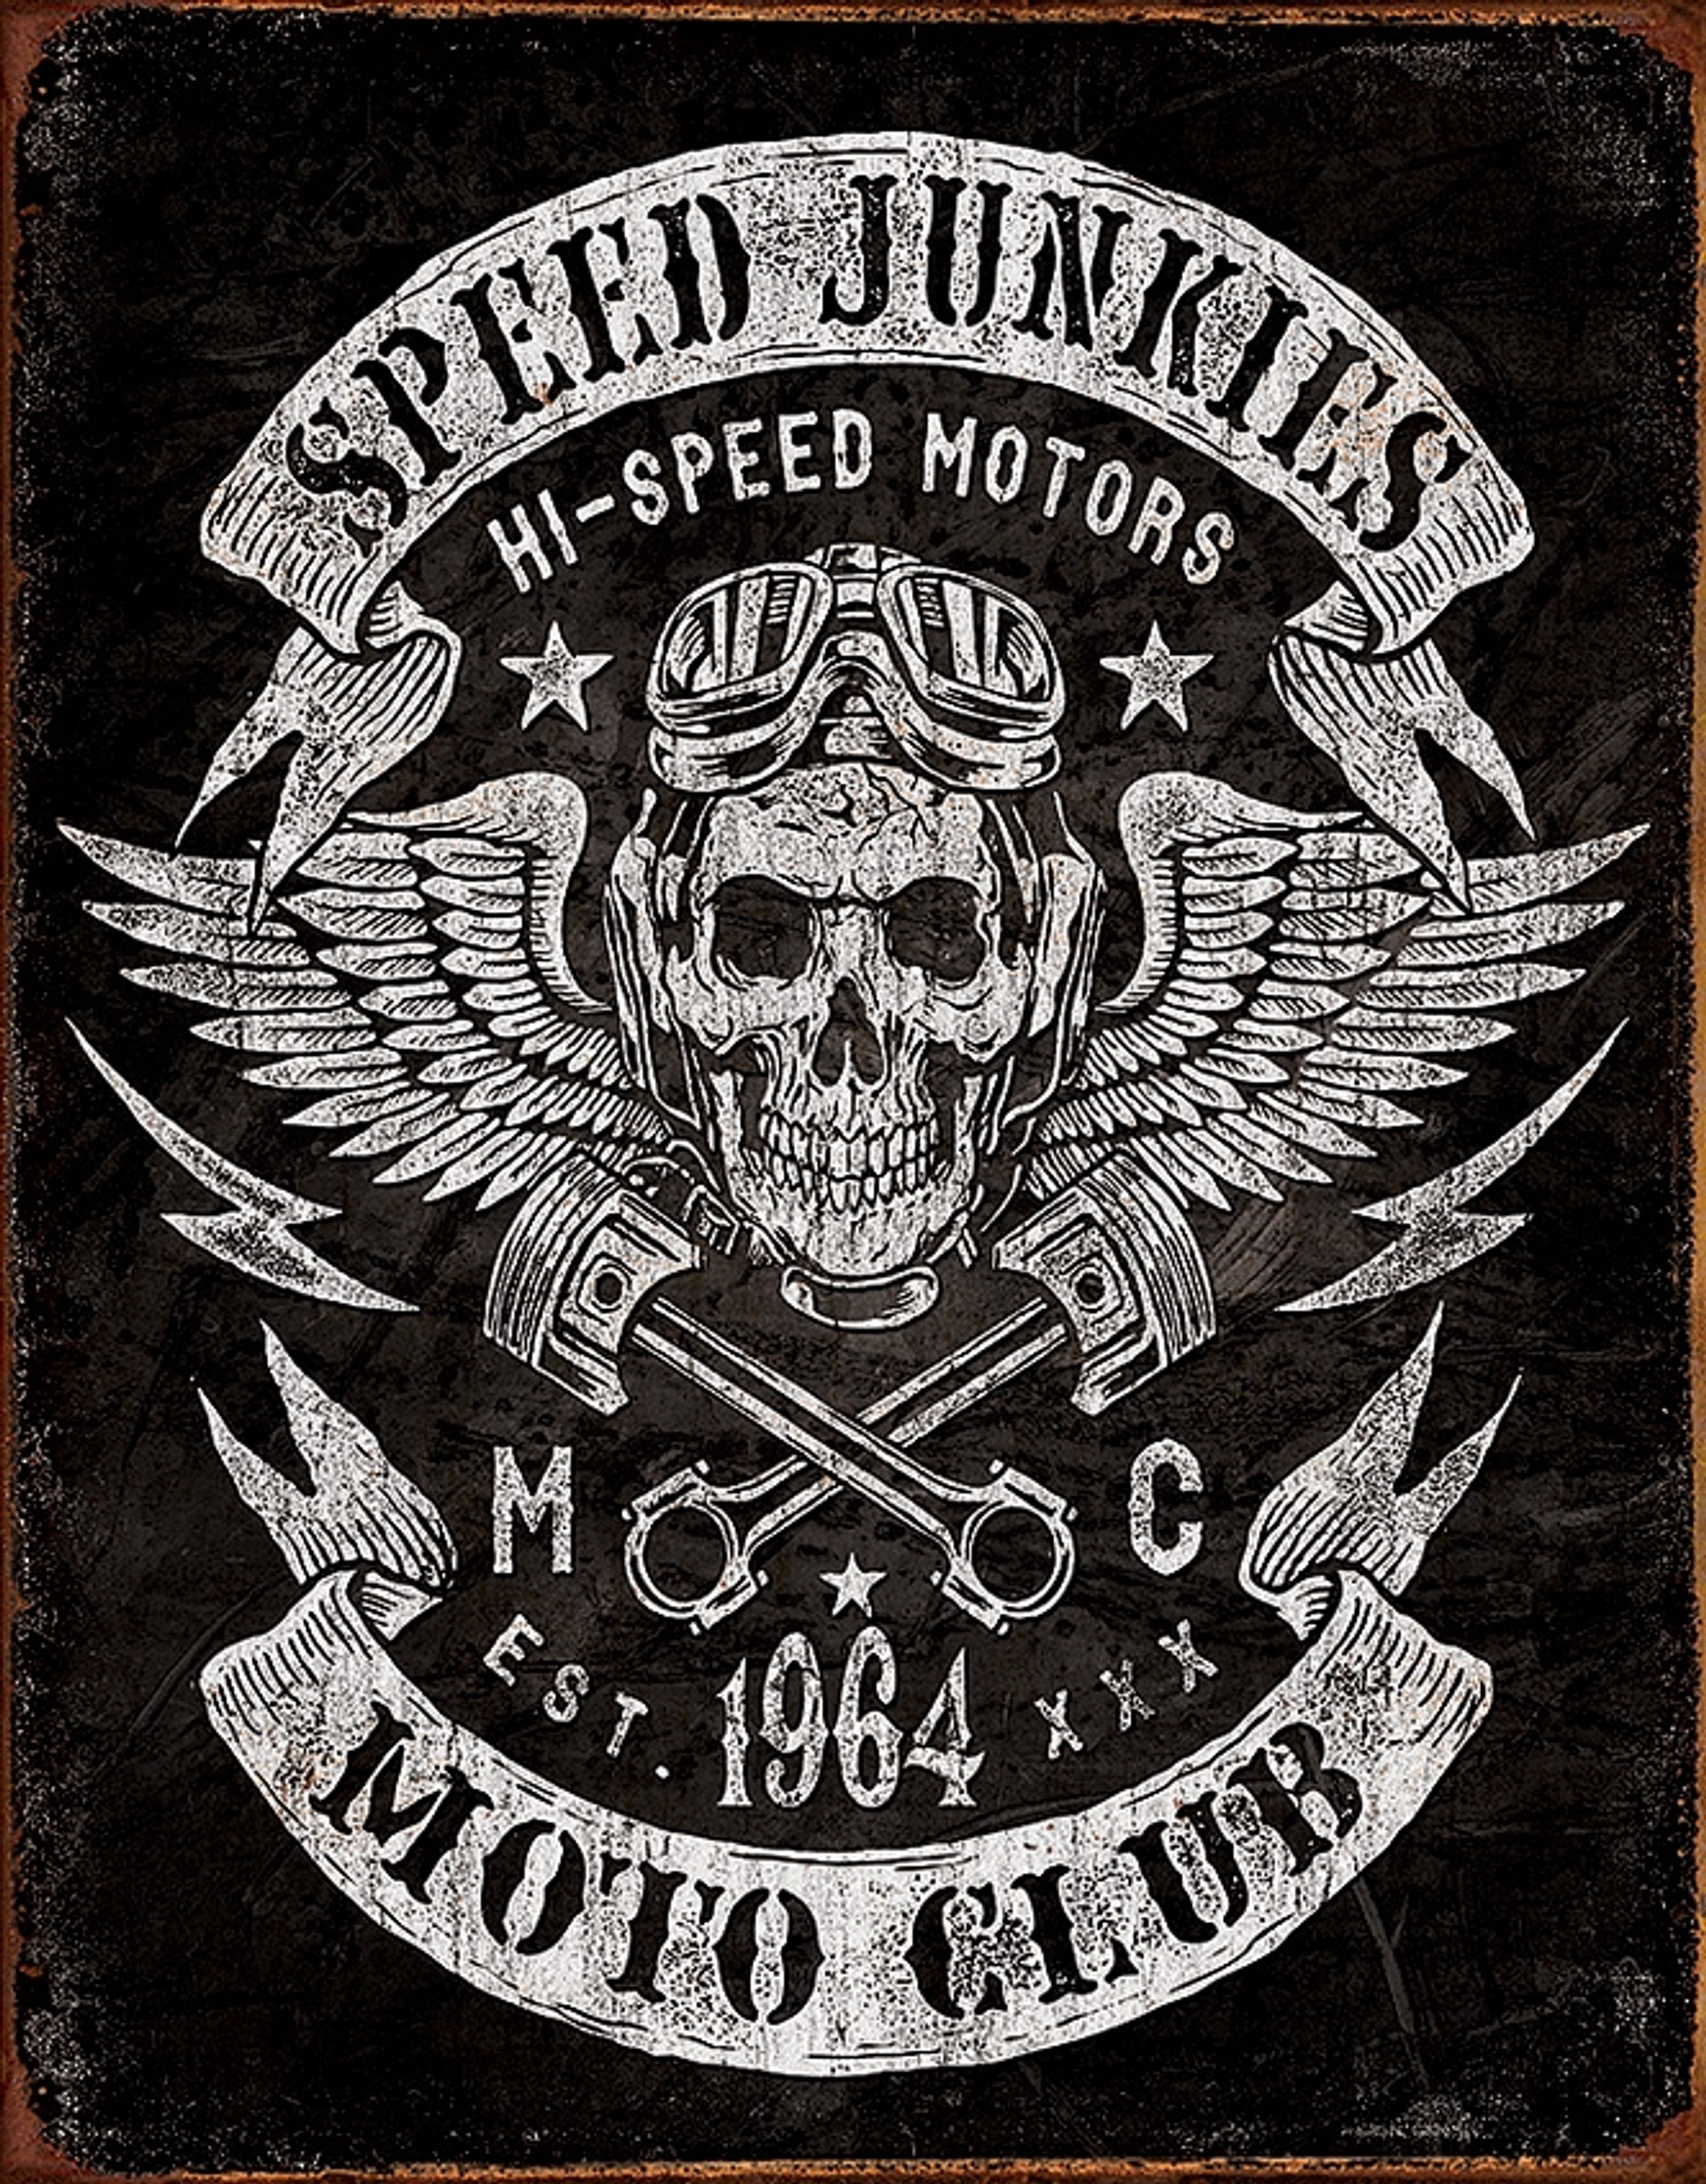 Speed Junkies Moto Club Sign